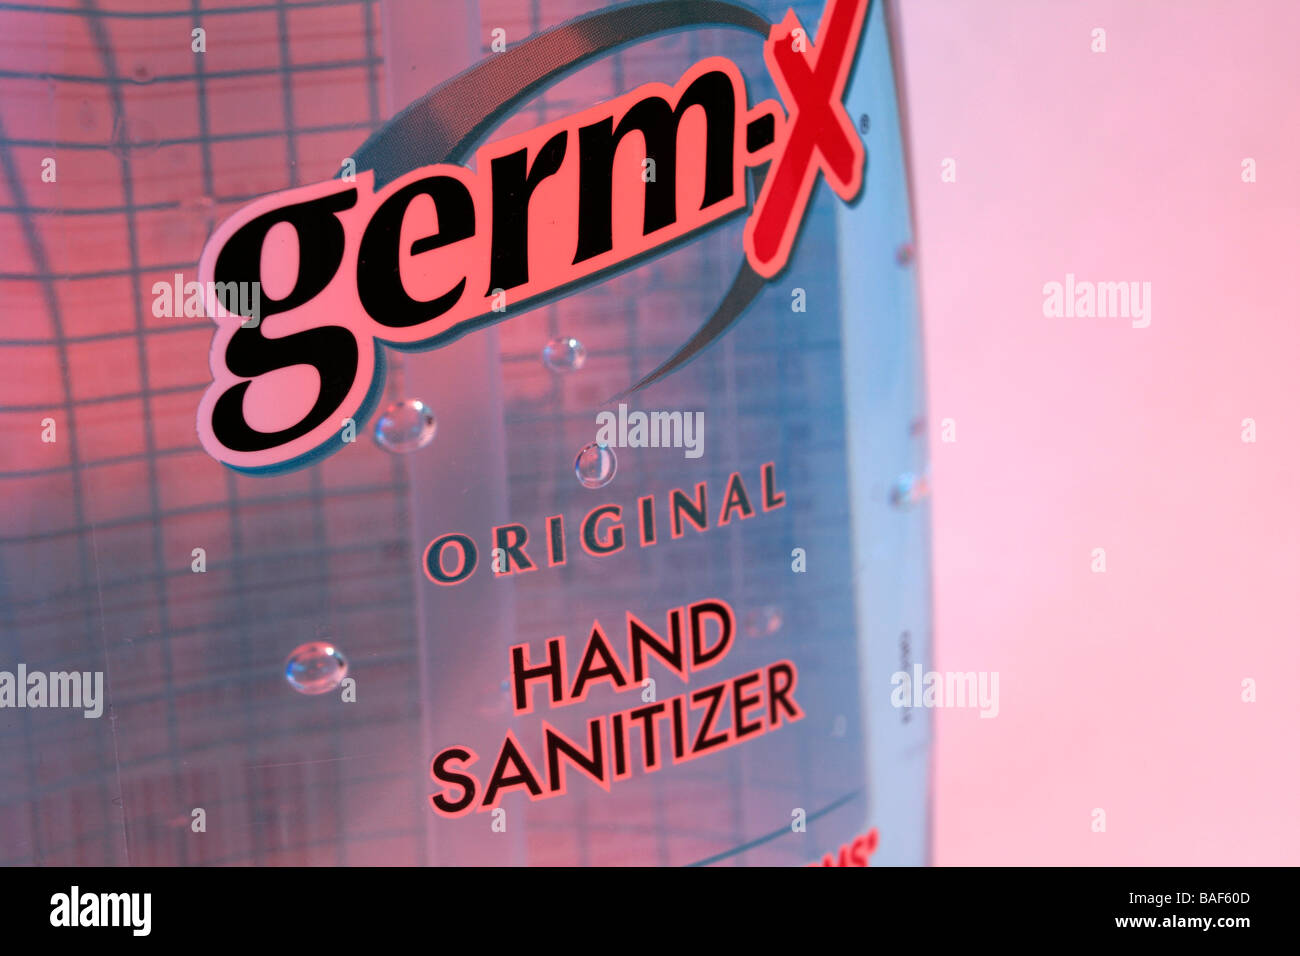 Germ X brand hand sanitizer gel 'Kills 99.99% of germs' Stock Photo